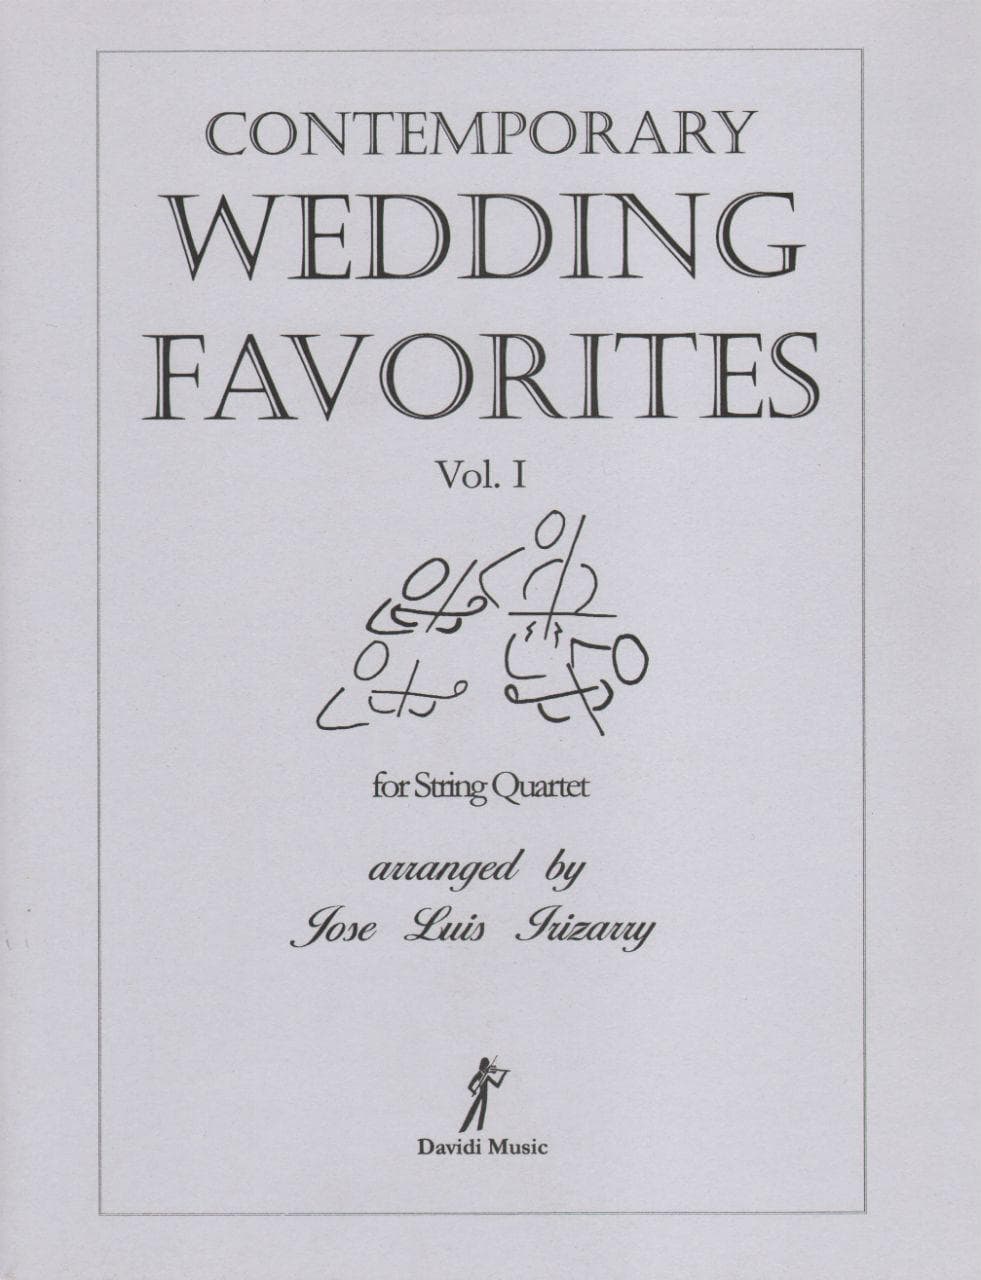 Contemporary Wedding Favorites Volume 1 for String Quartet - Arranged by Irizarry - Davidi Music Publication